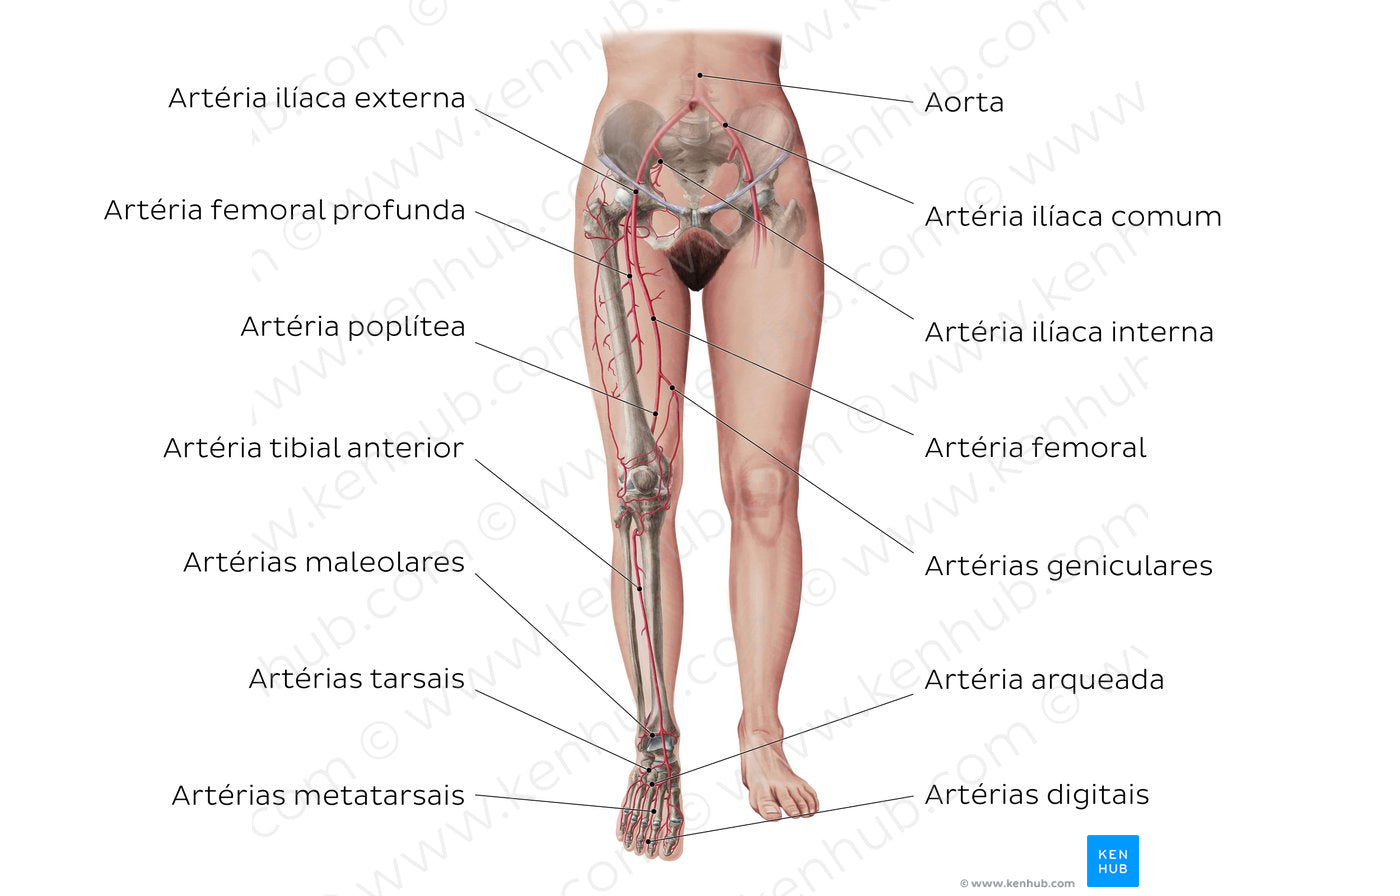 Main arteries of the lower limb (Portuguese)